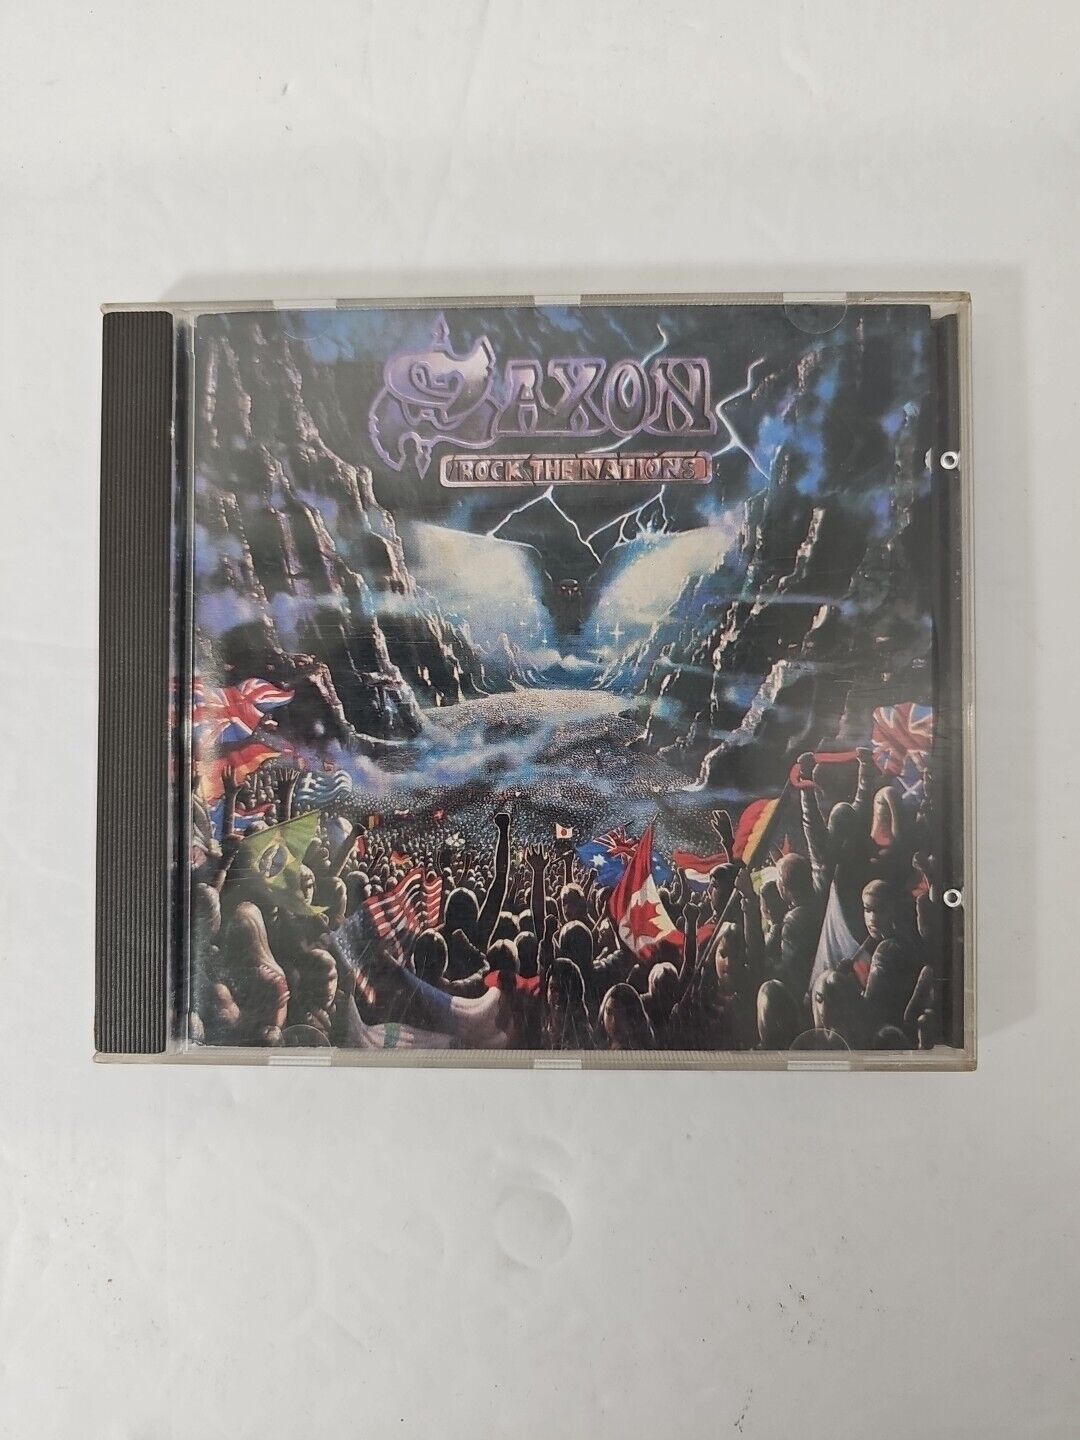 SAXON - ROCK THE NATIONS - CD 1986